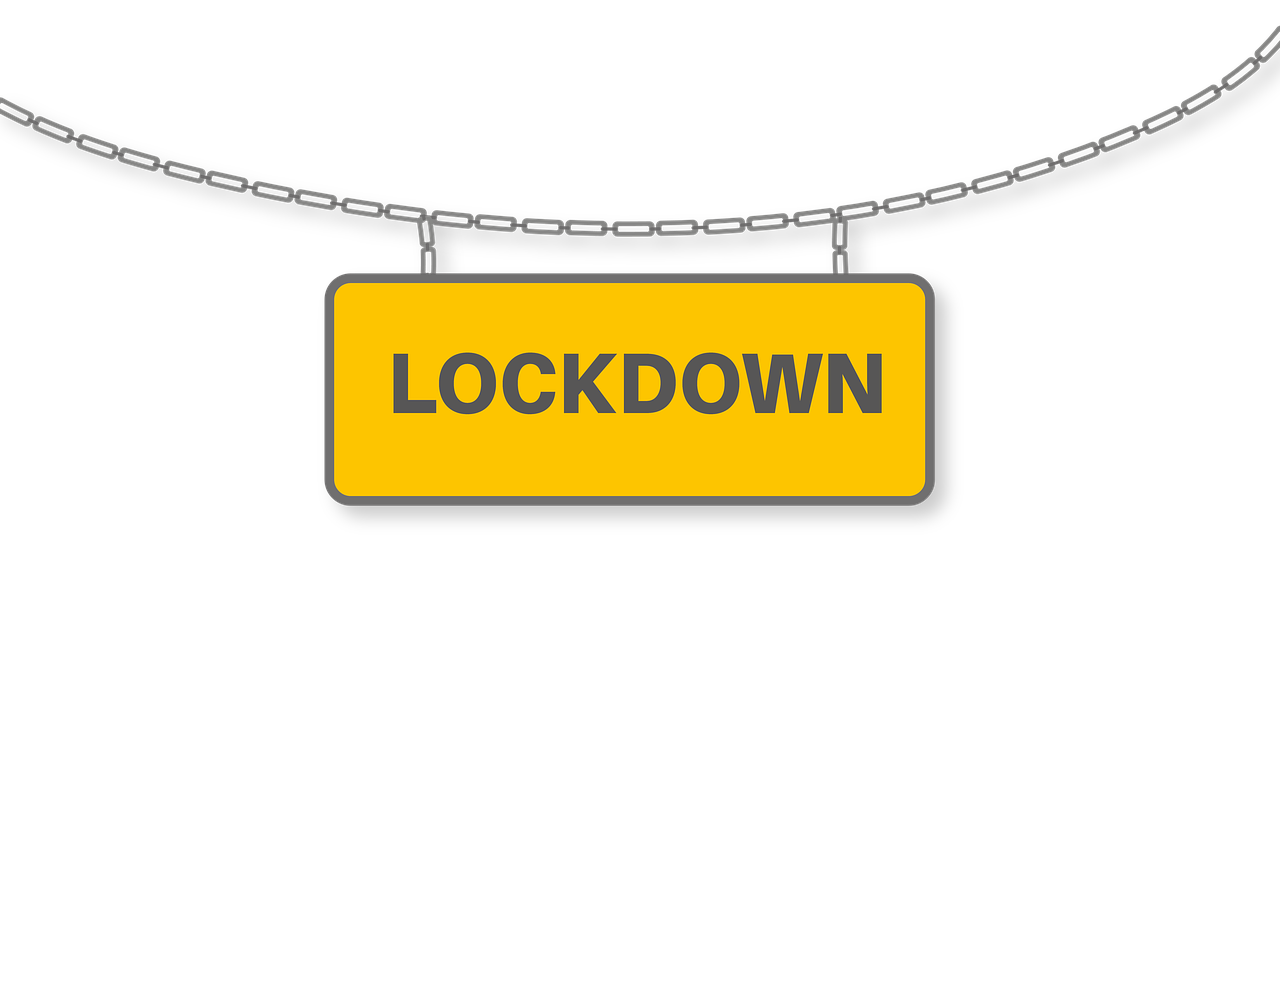 lockdown sign